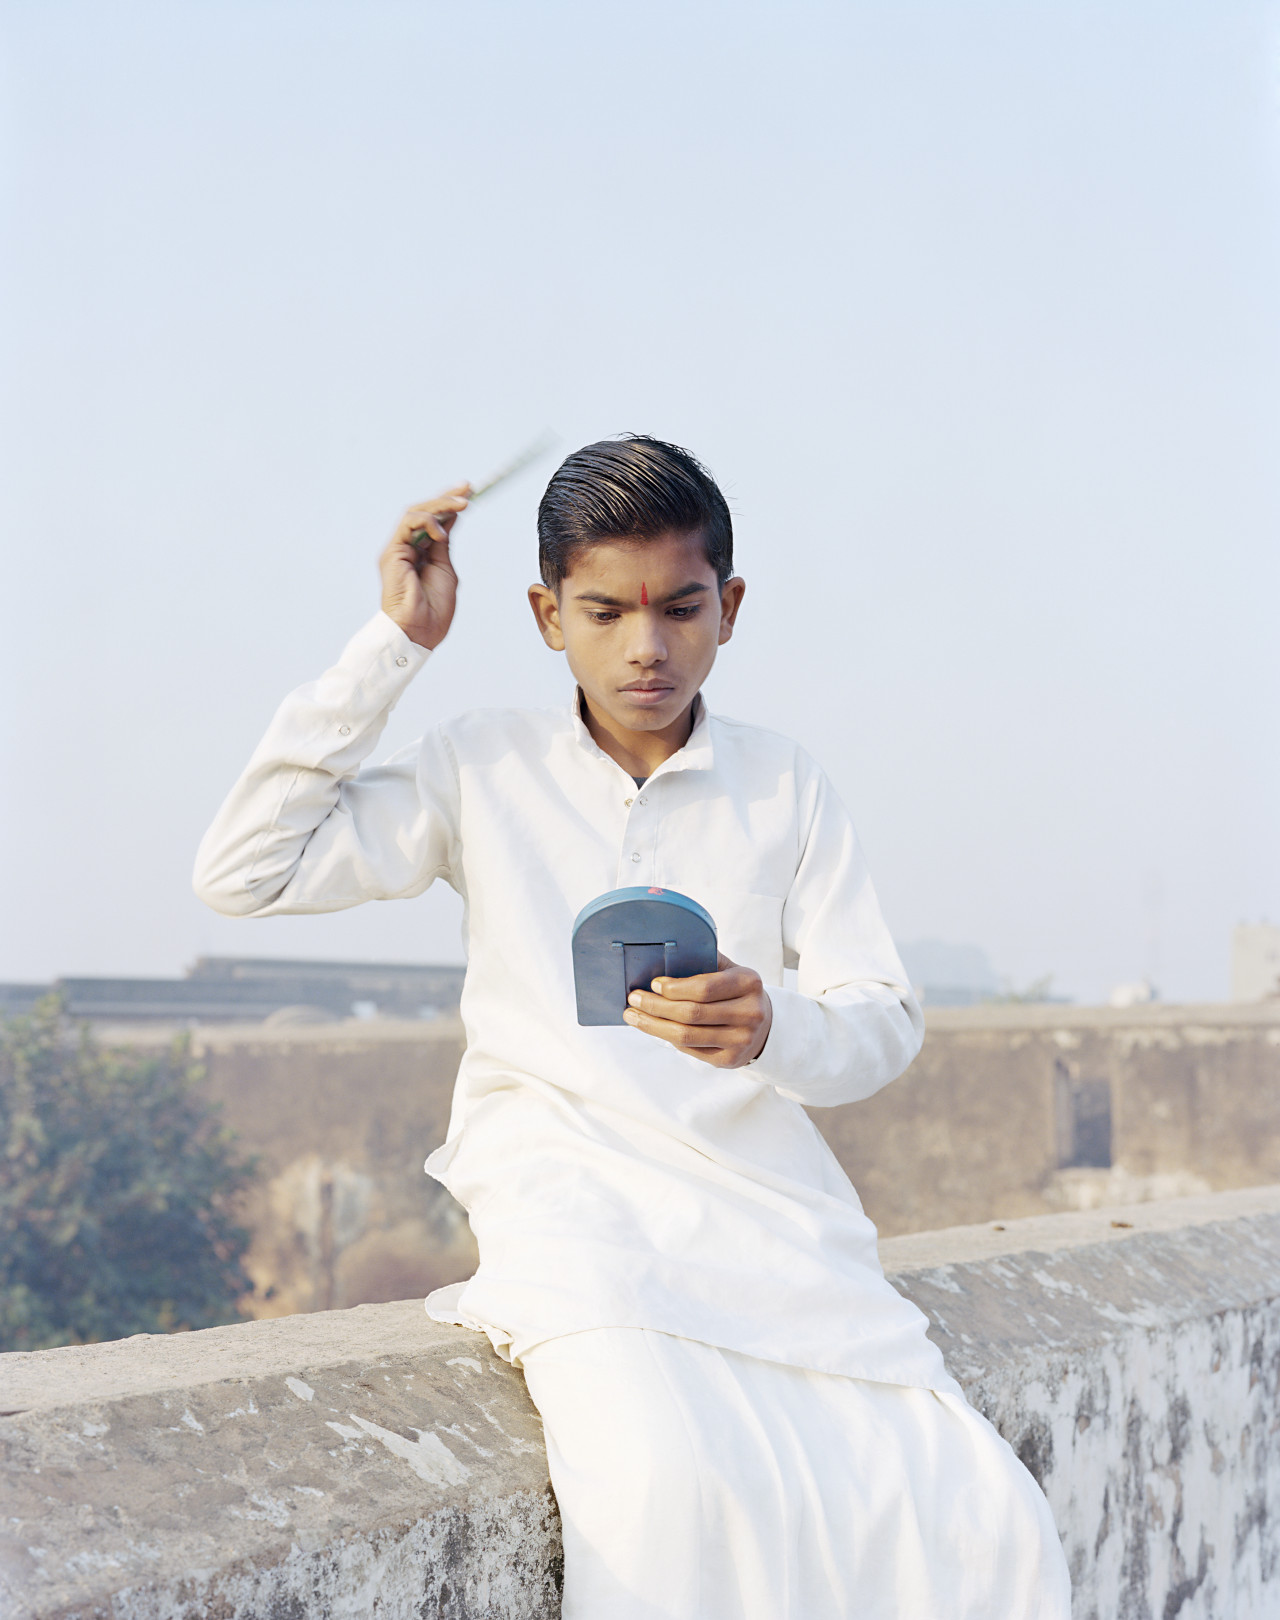 Rama Combing His Hair Ayodhya, India, 2015 ©Vasantha Yogananthan